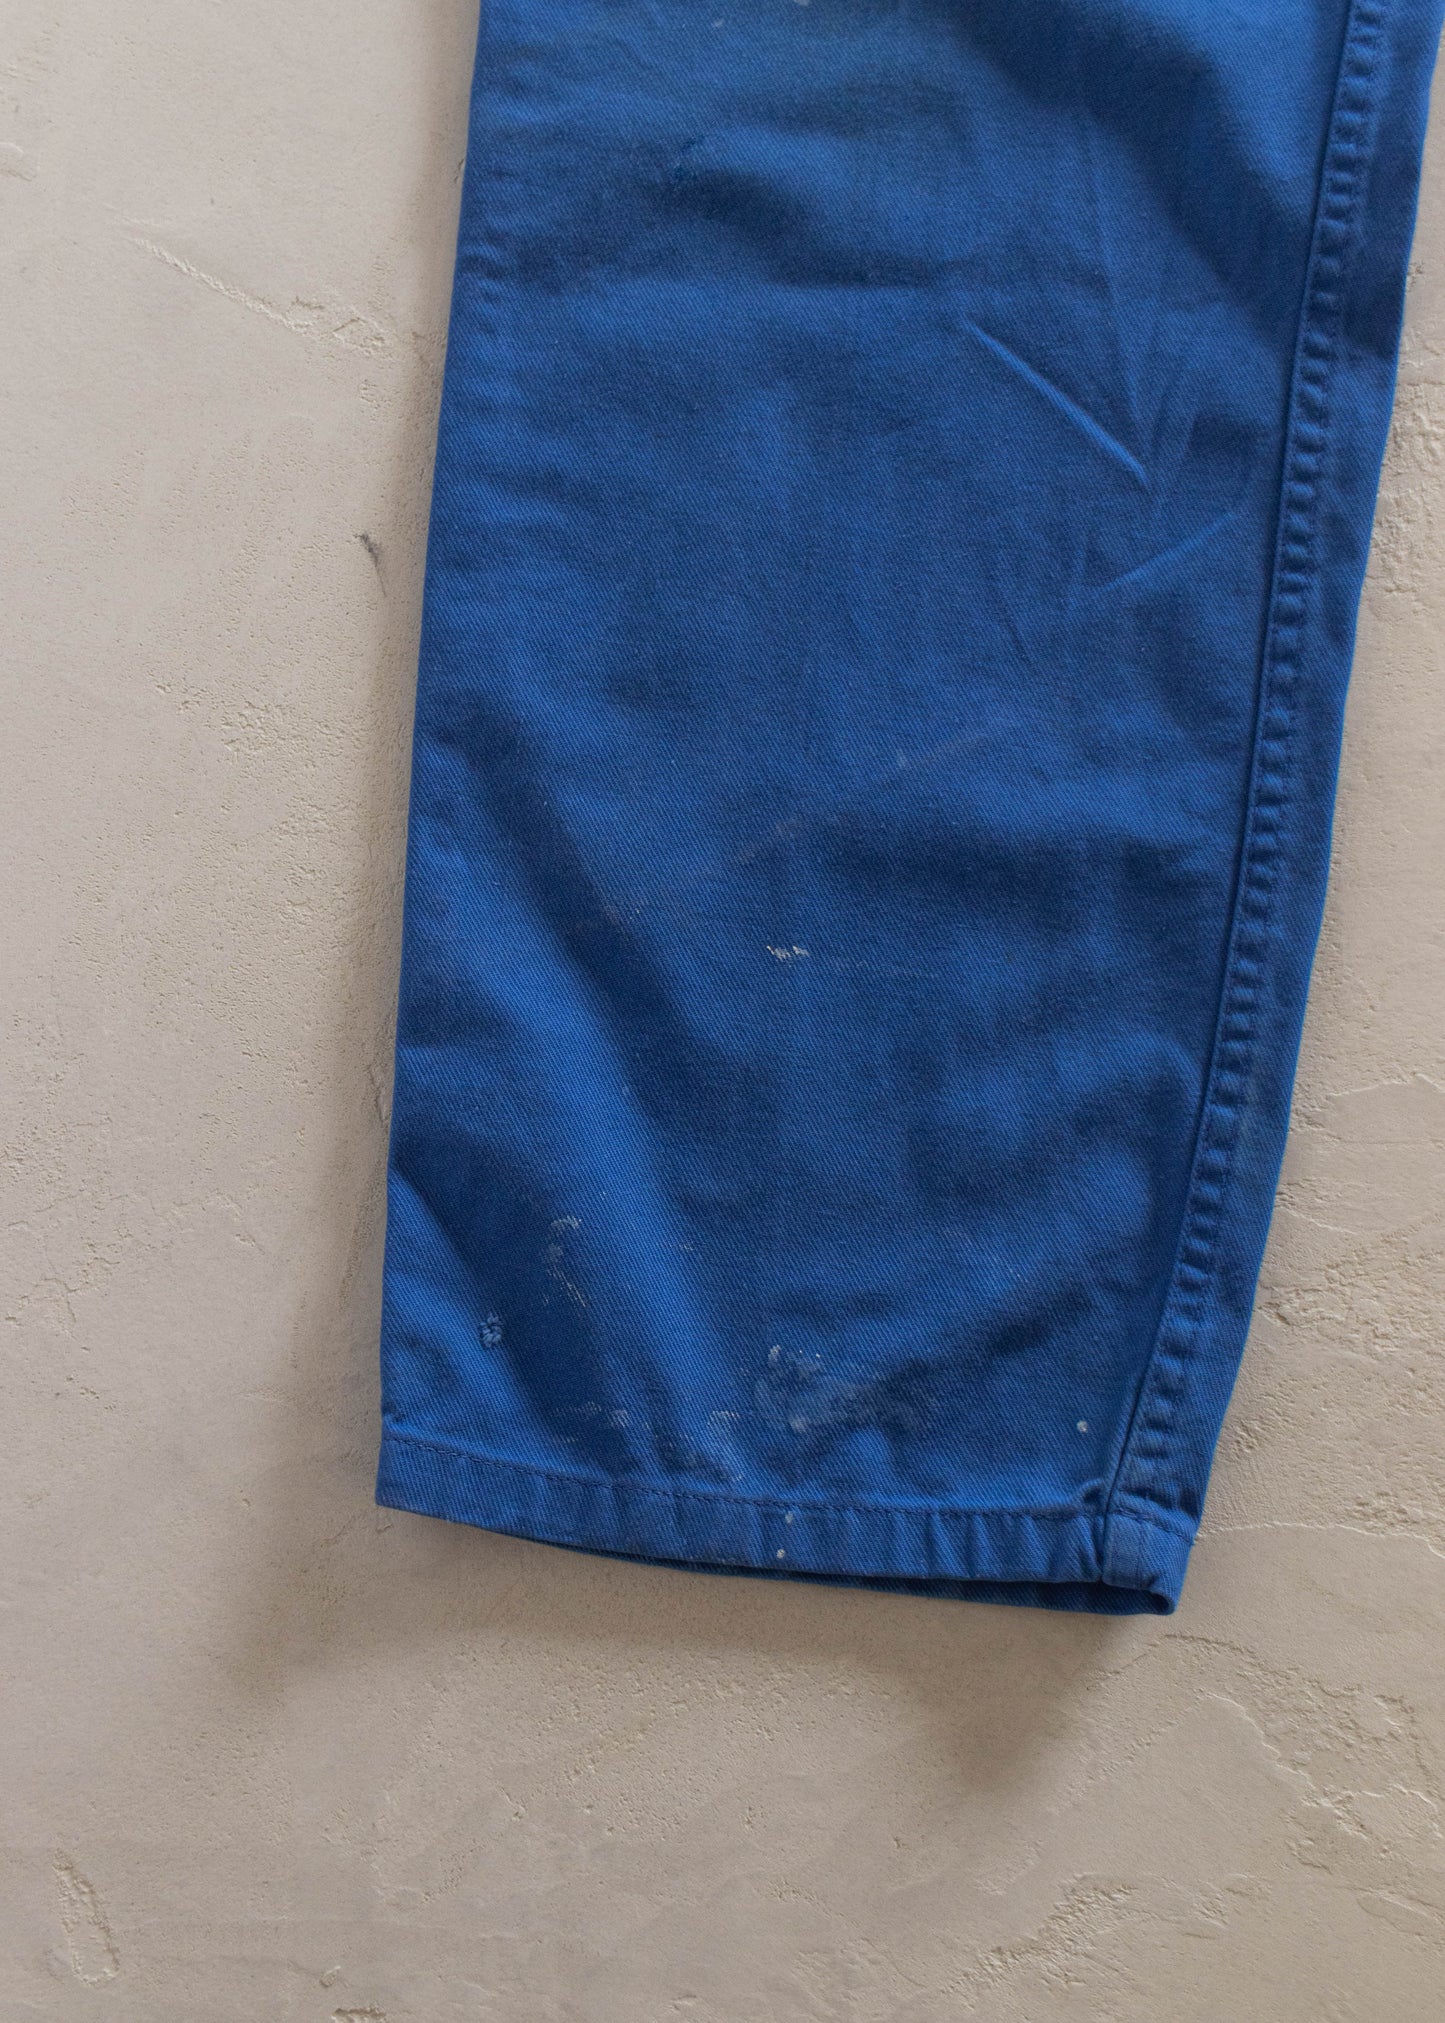 1980s French Workwear Chore Pants Size Women's 32 Men's 34